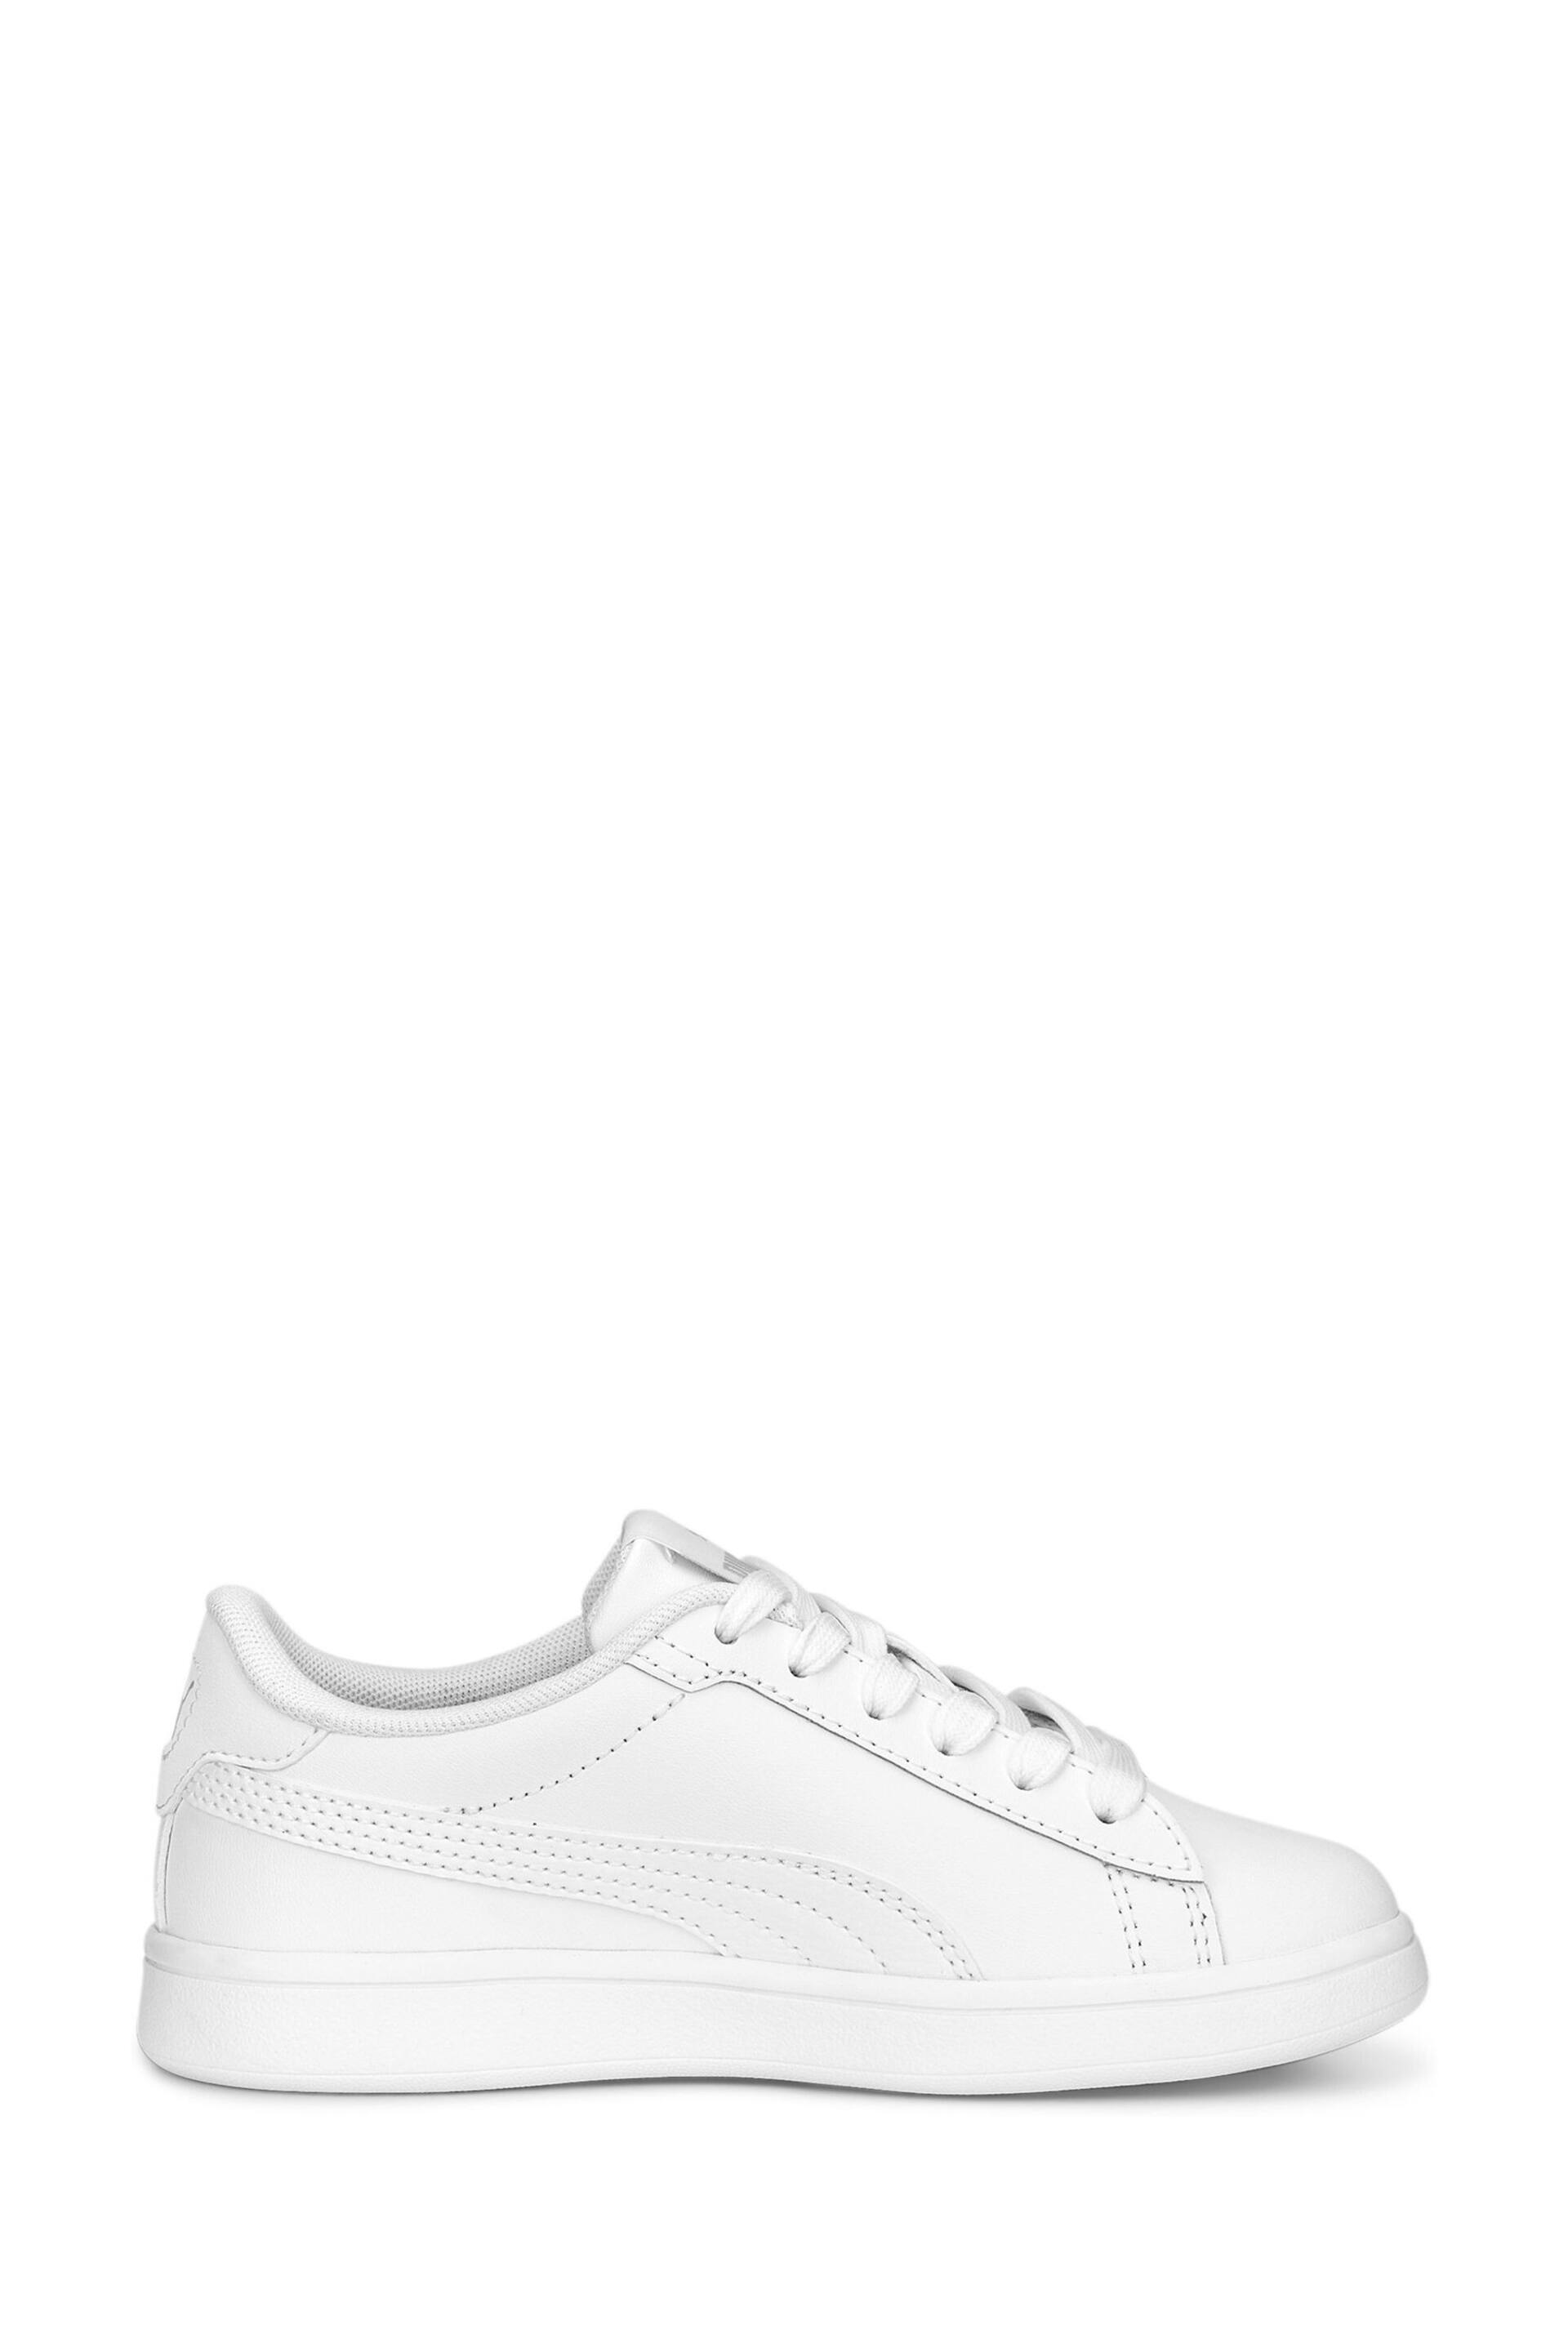 Puma White Smash 3.0 L Shoes - Image 1 of 6